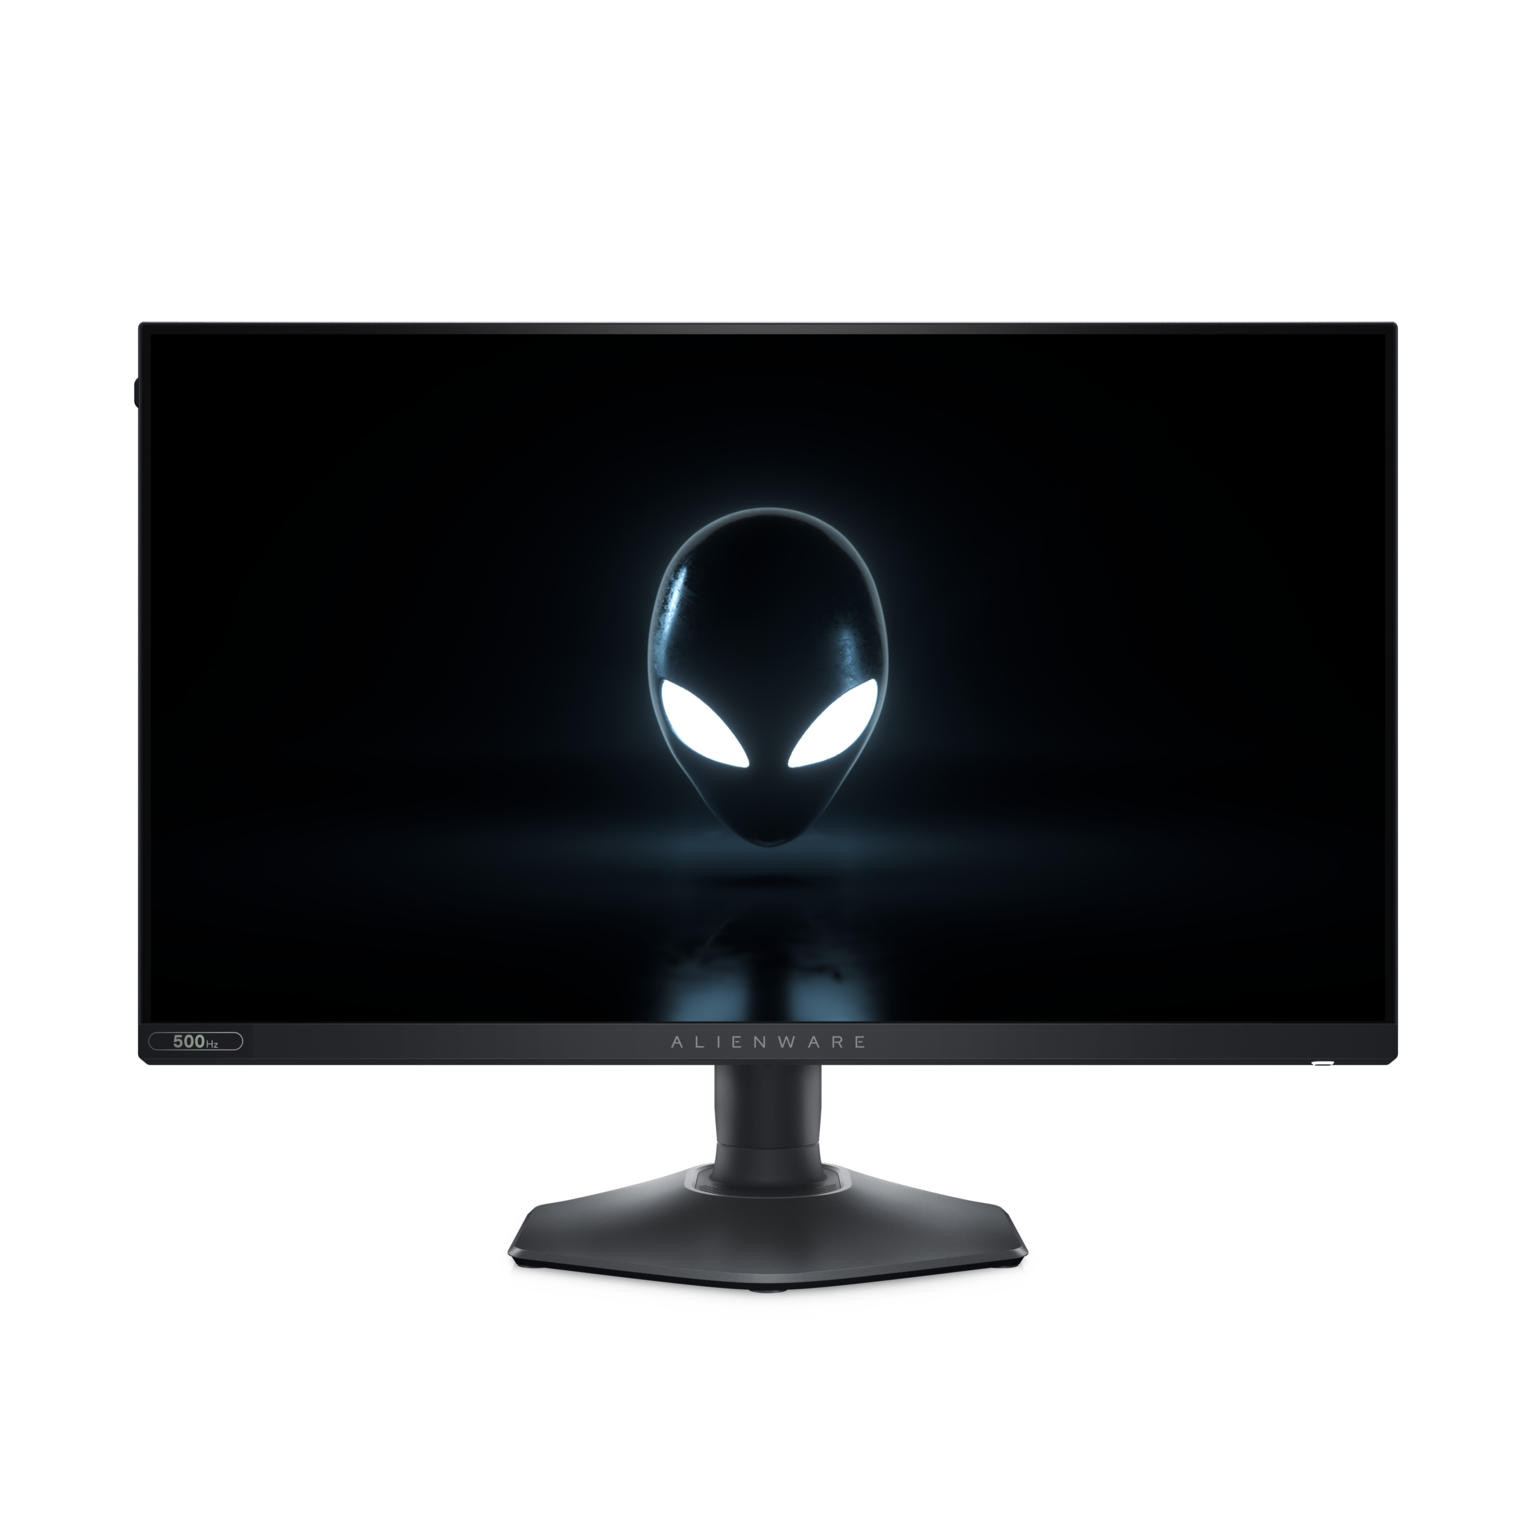 Dell Alienware AW2524HF monitor